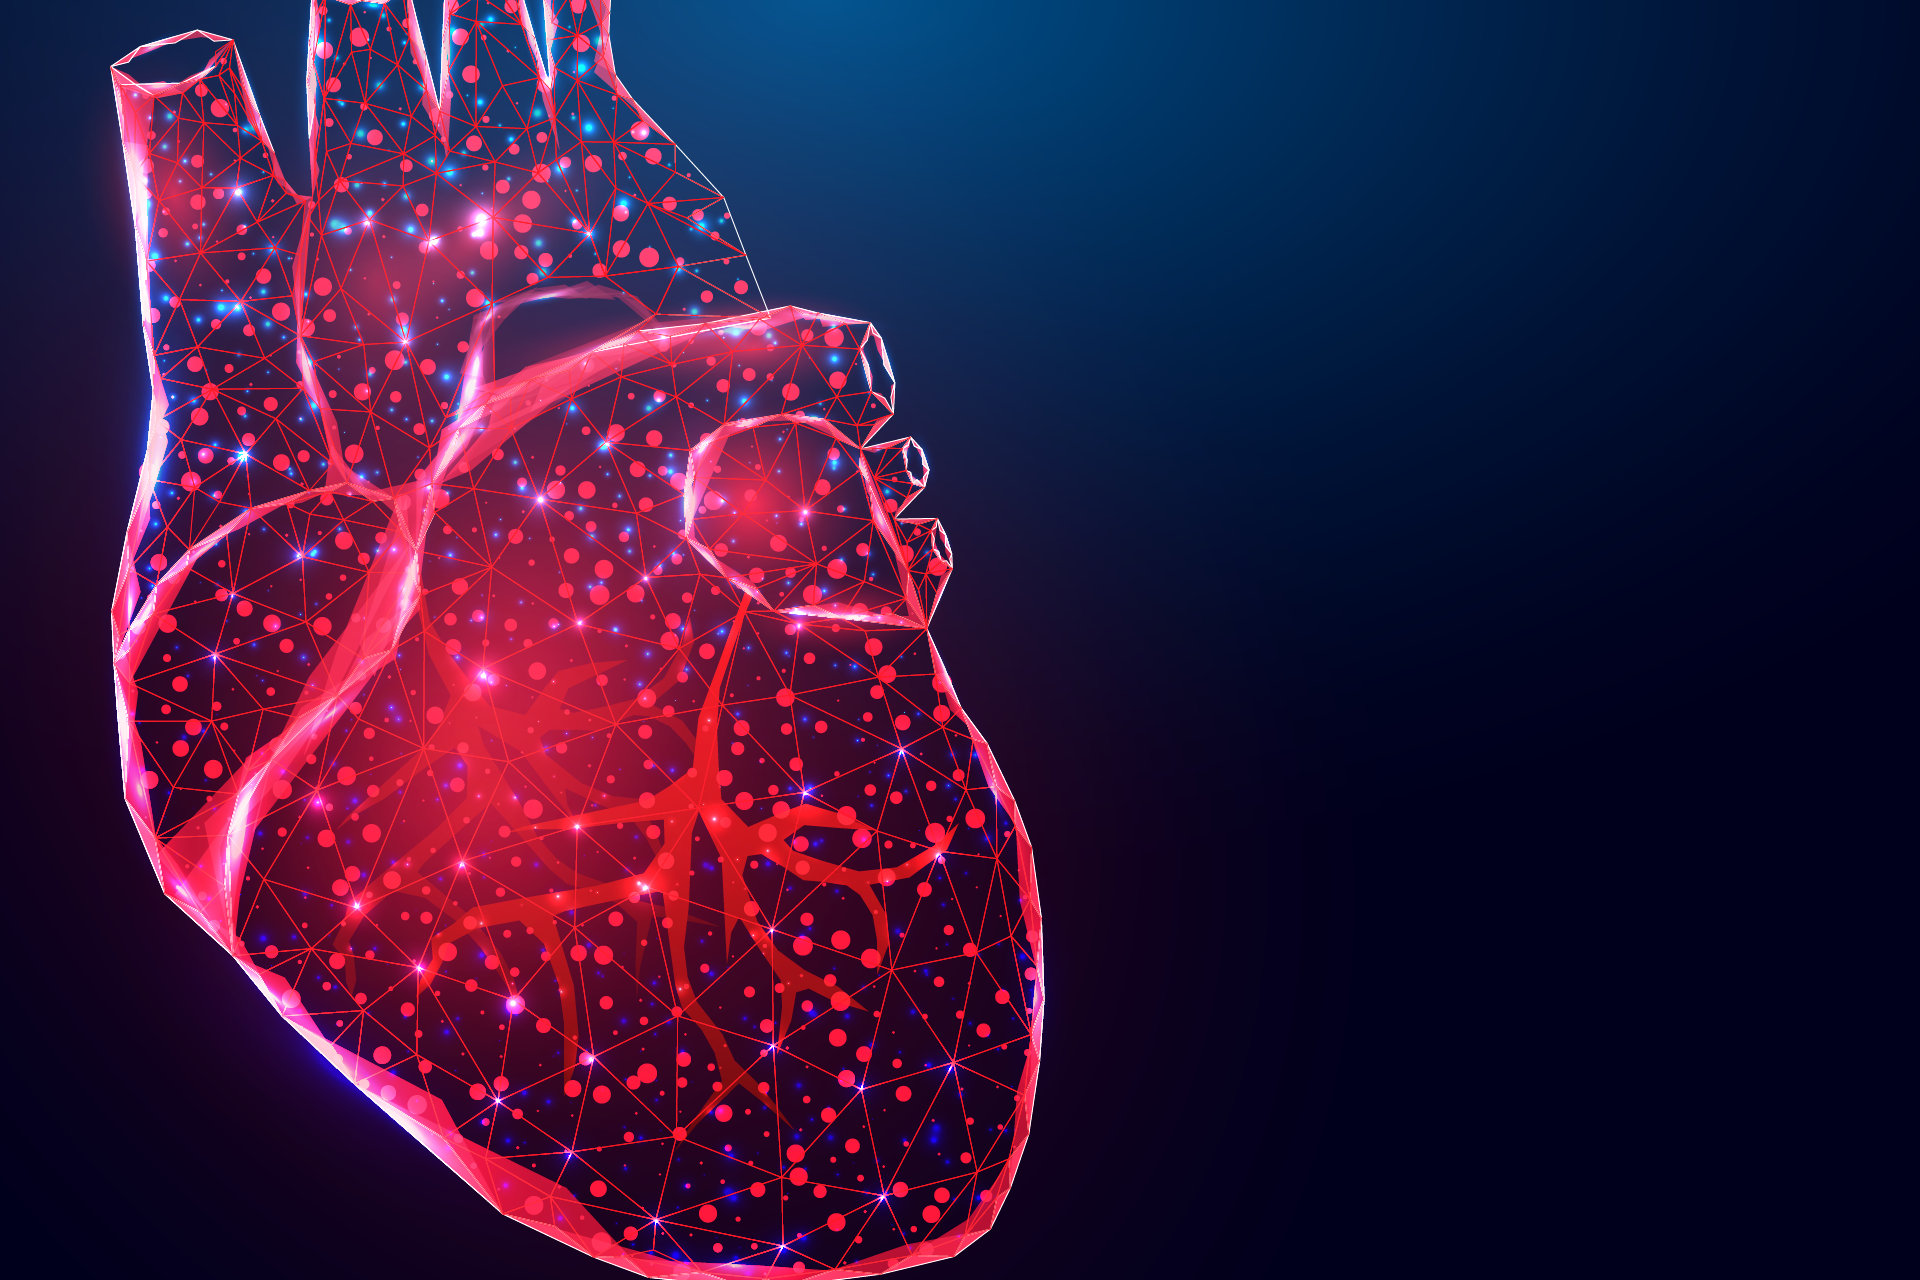 A stylized illustration of a human heart